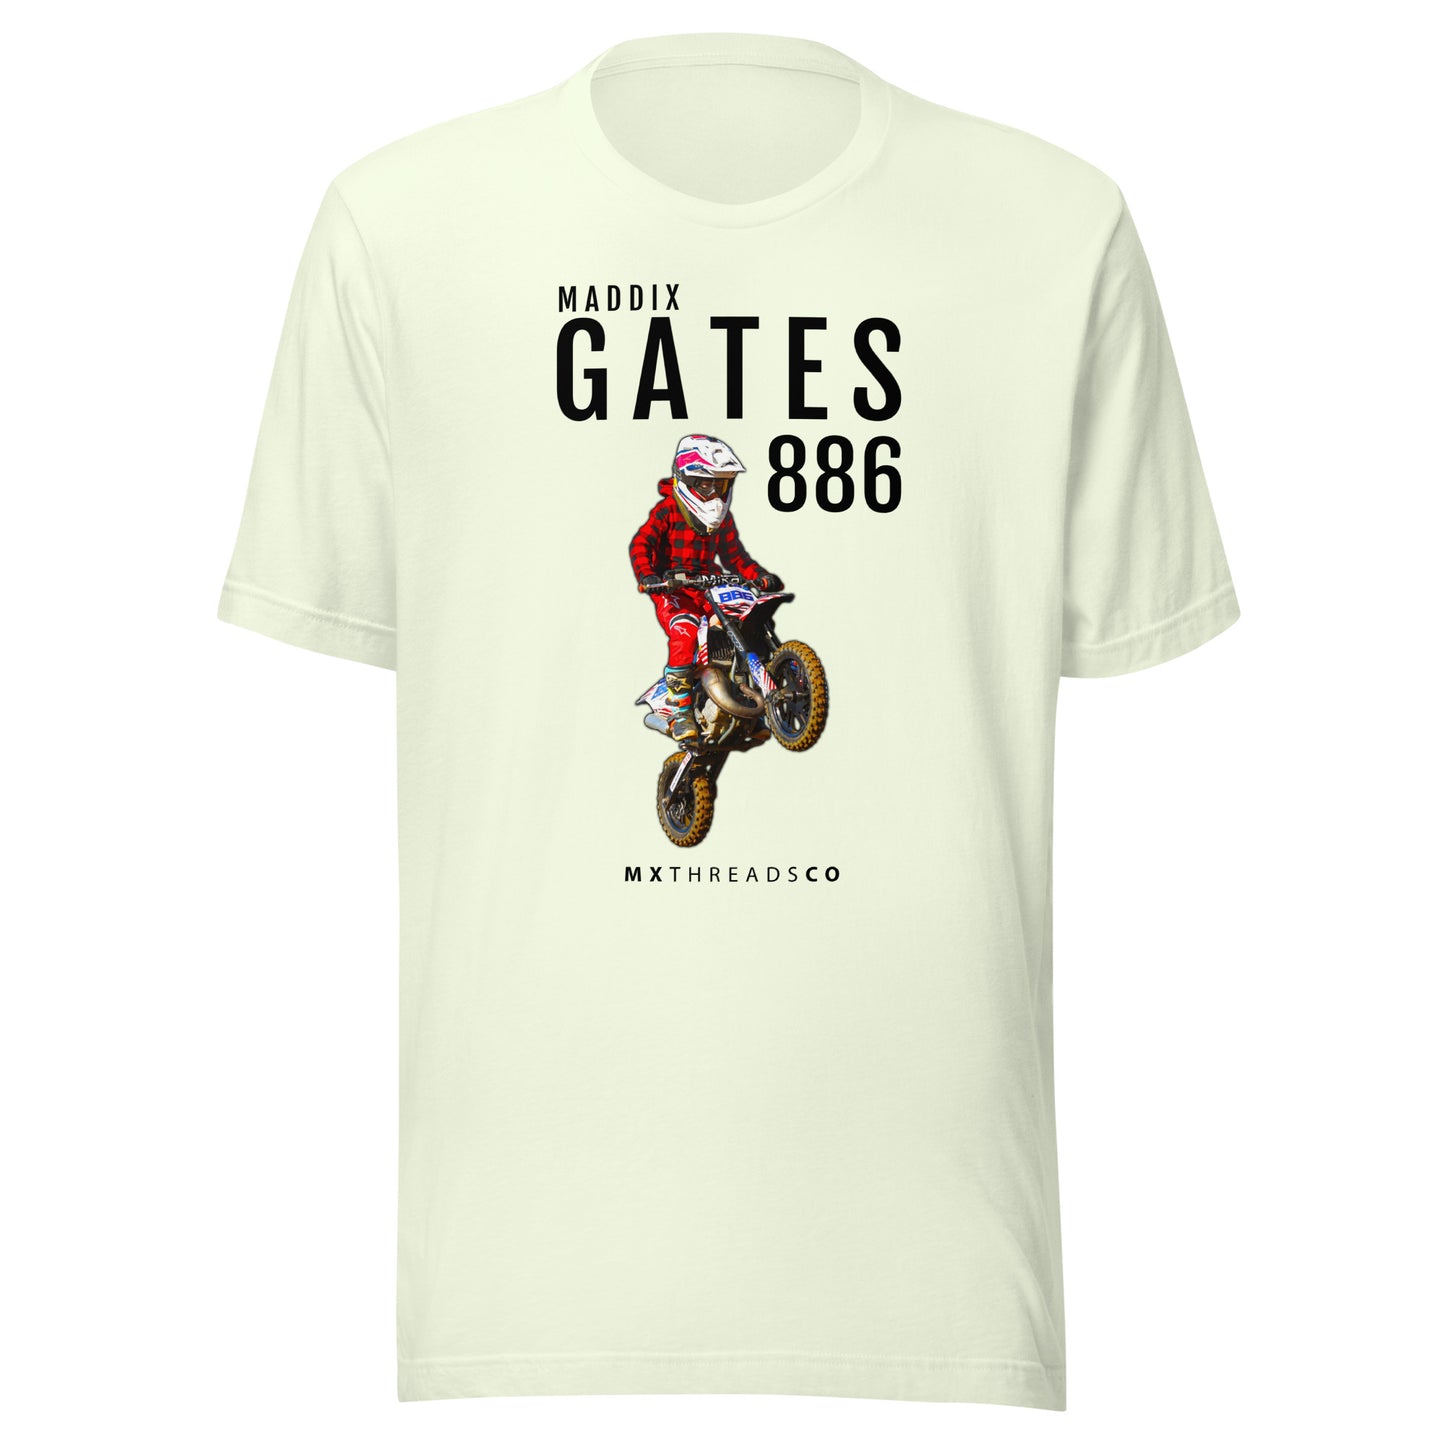 Maddix Gates Photo-Graphic Series T-Shirt